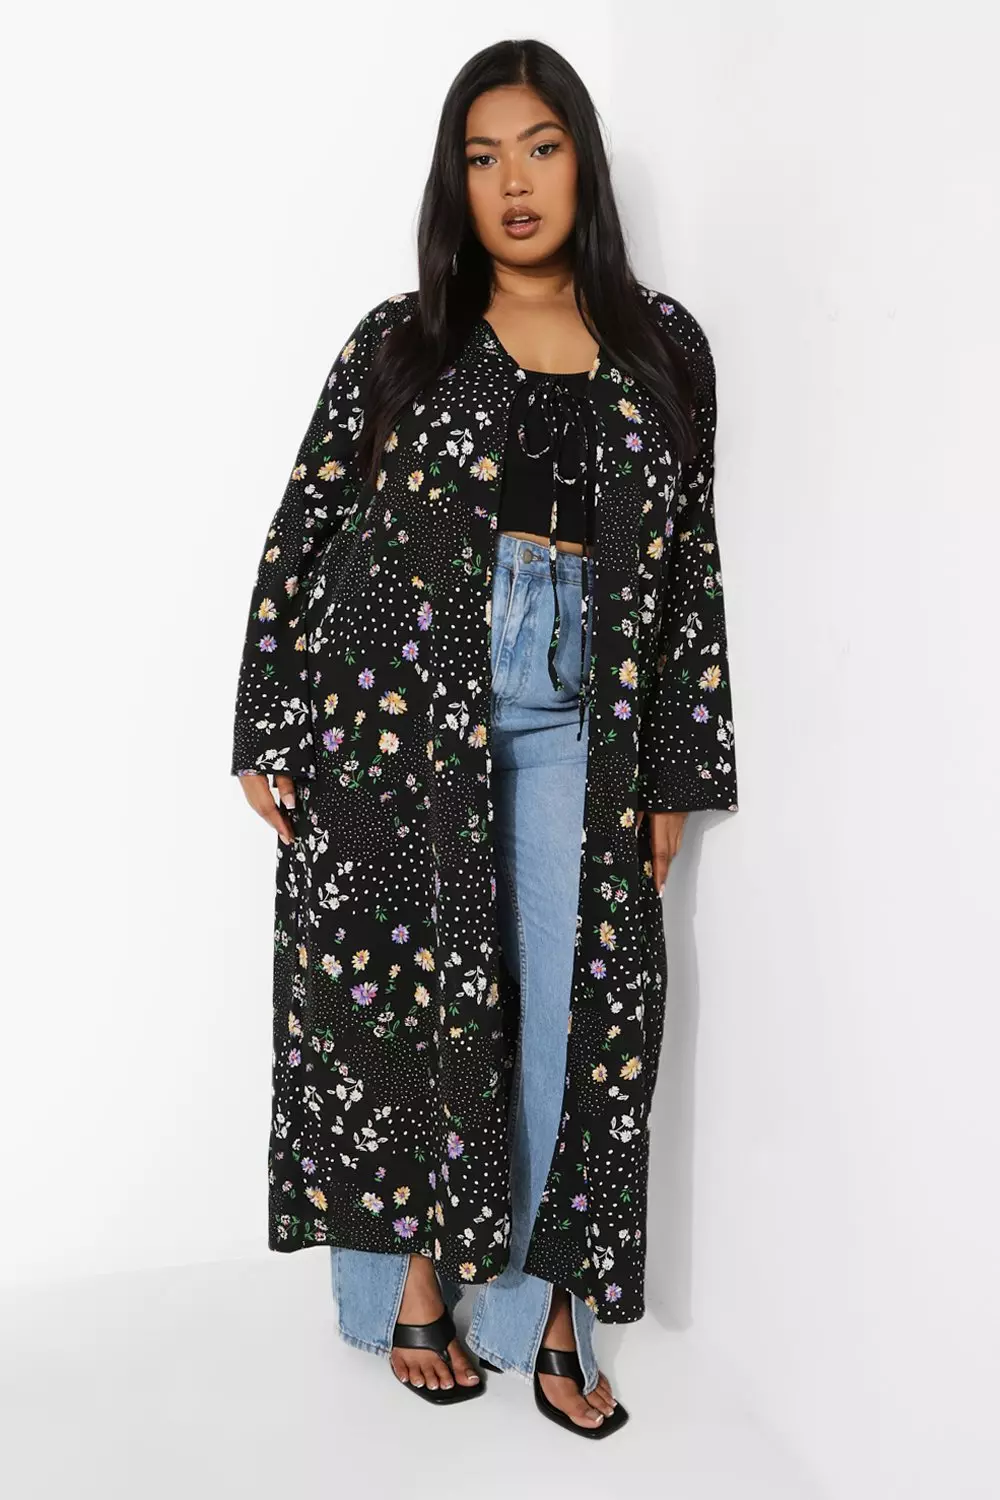 Regan initial Garanti Women's Plus Mixed Floral Kimono | Boohoo UK